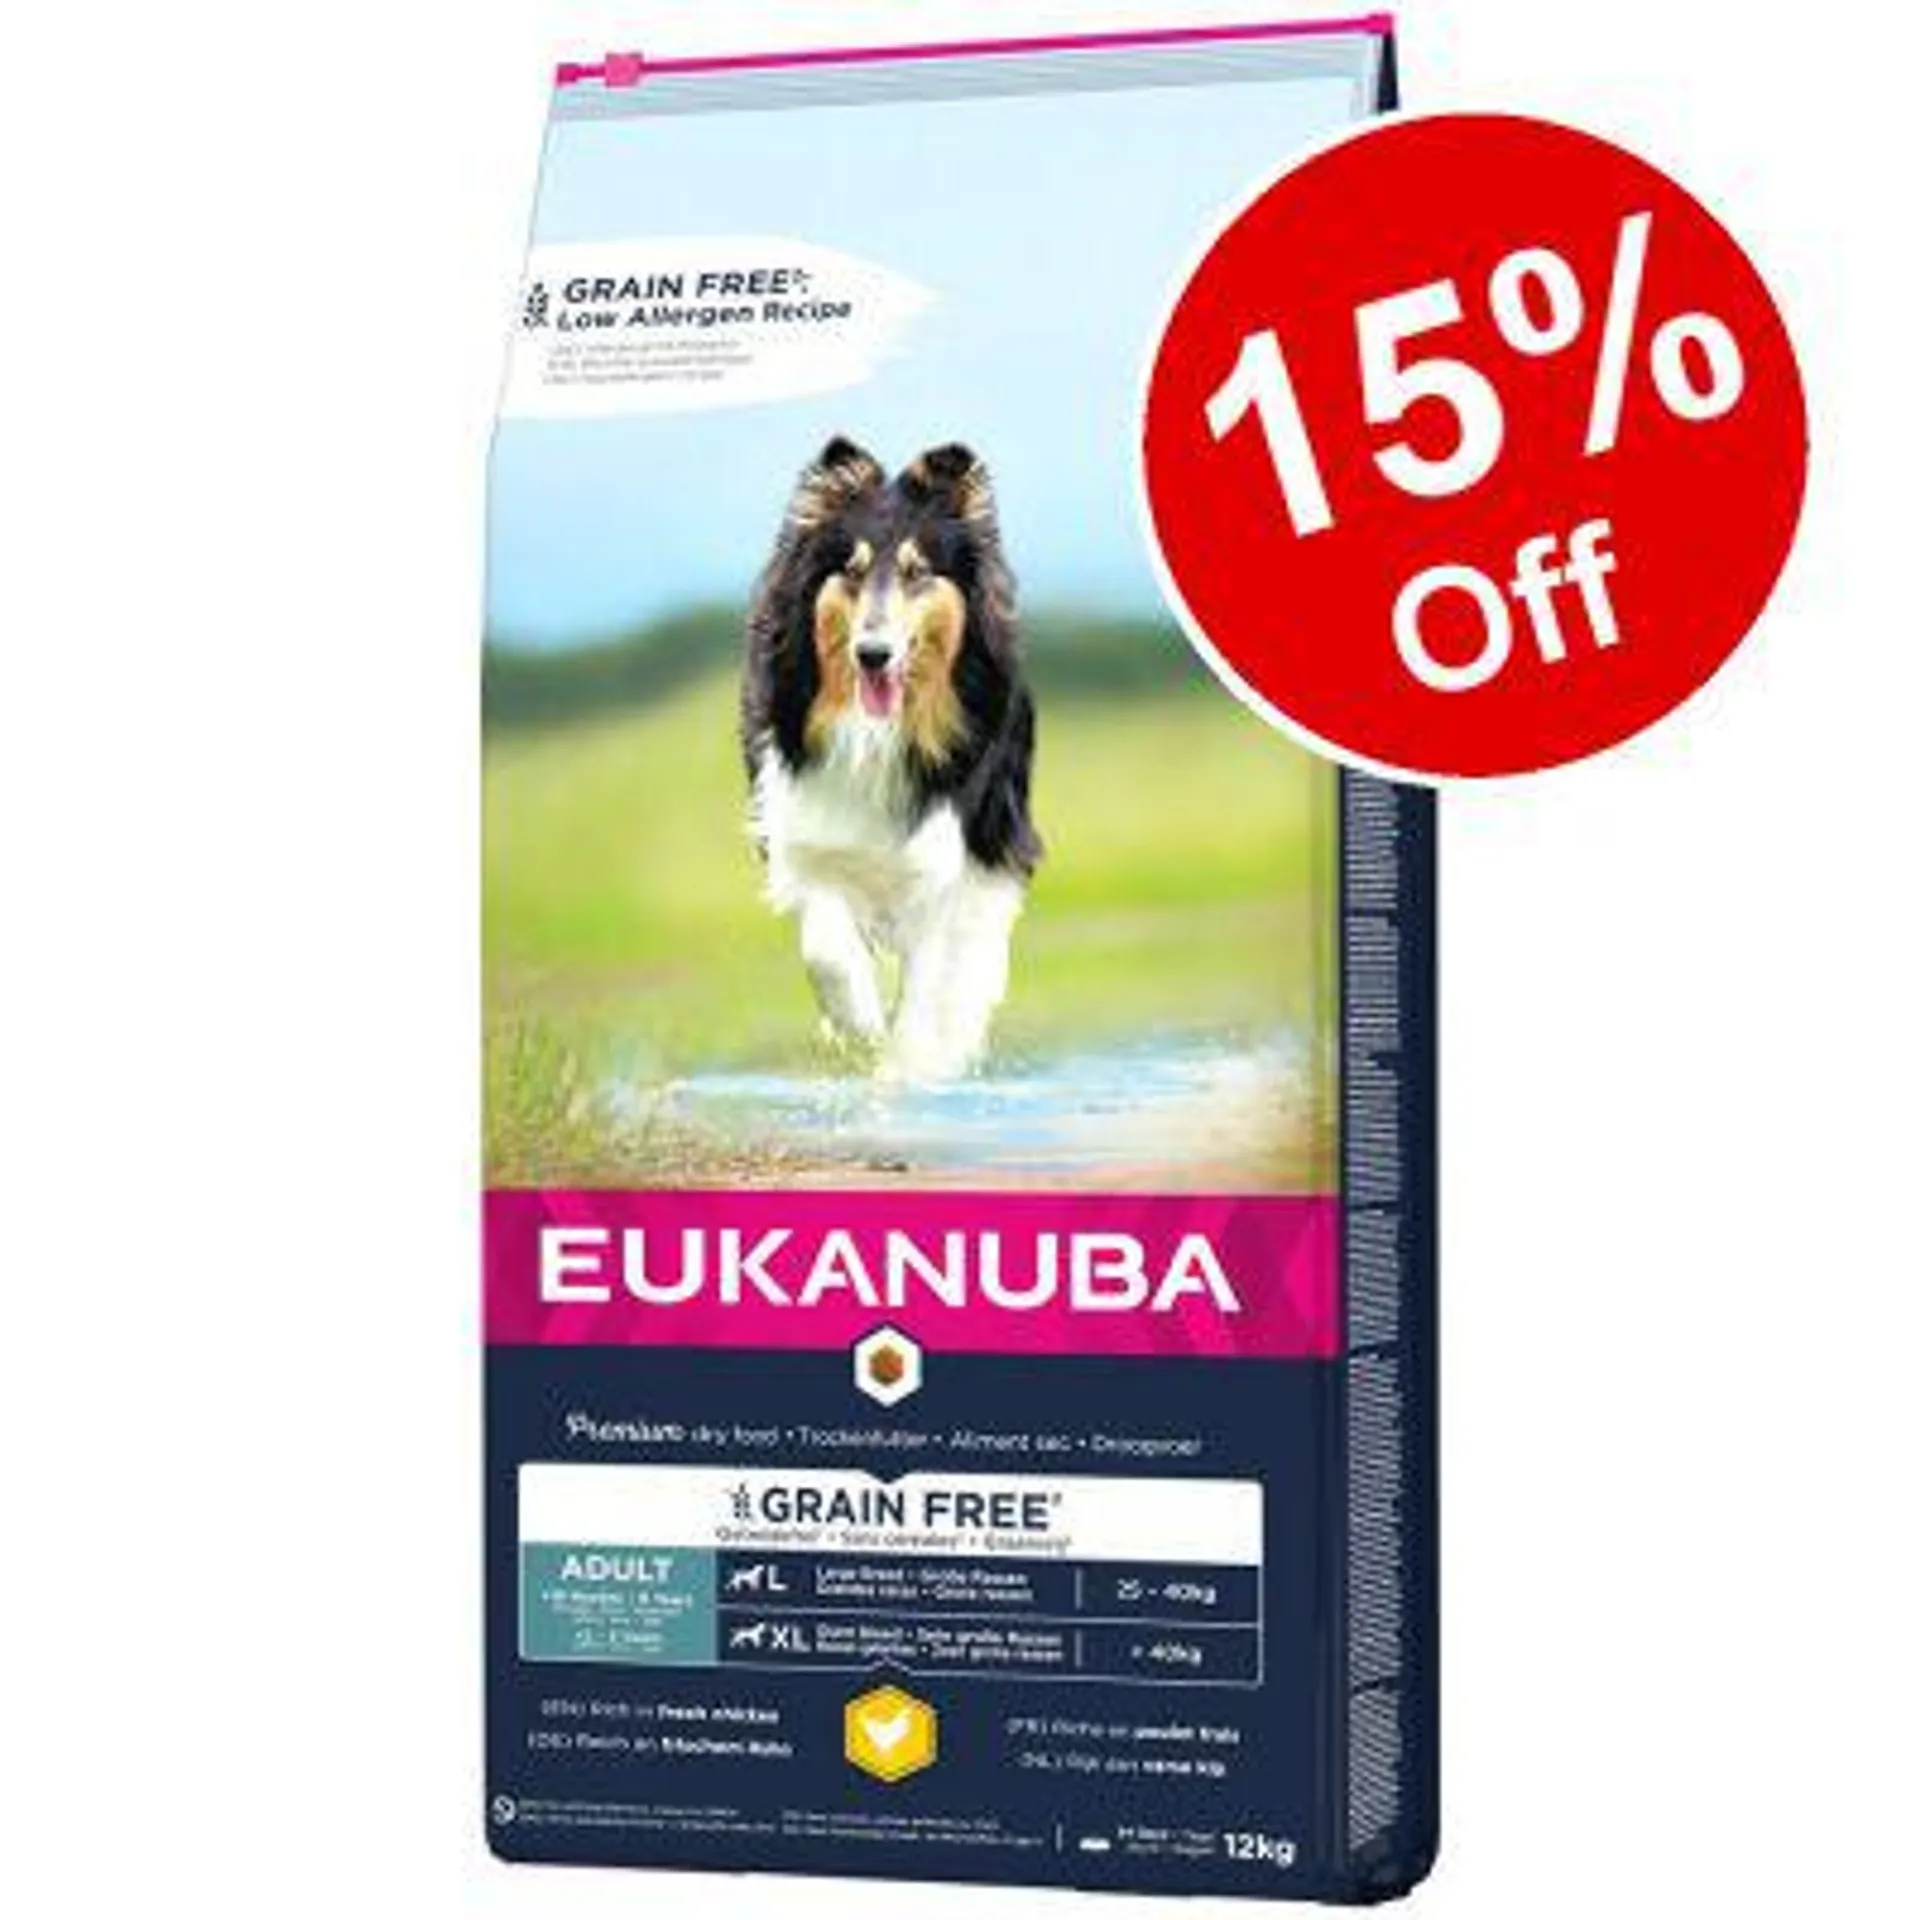 12kg Eukanuba Grain Free Adult Dry Dog Food – 15% Off!*